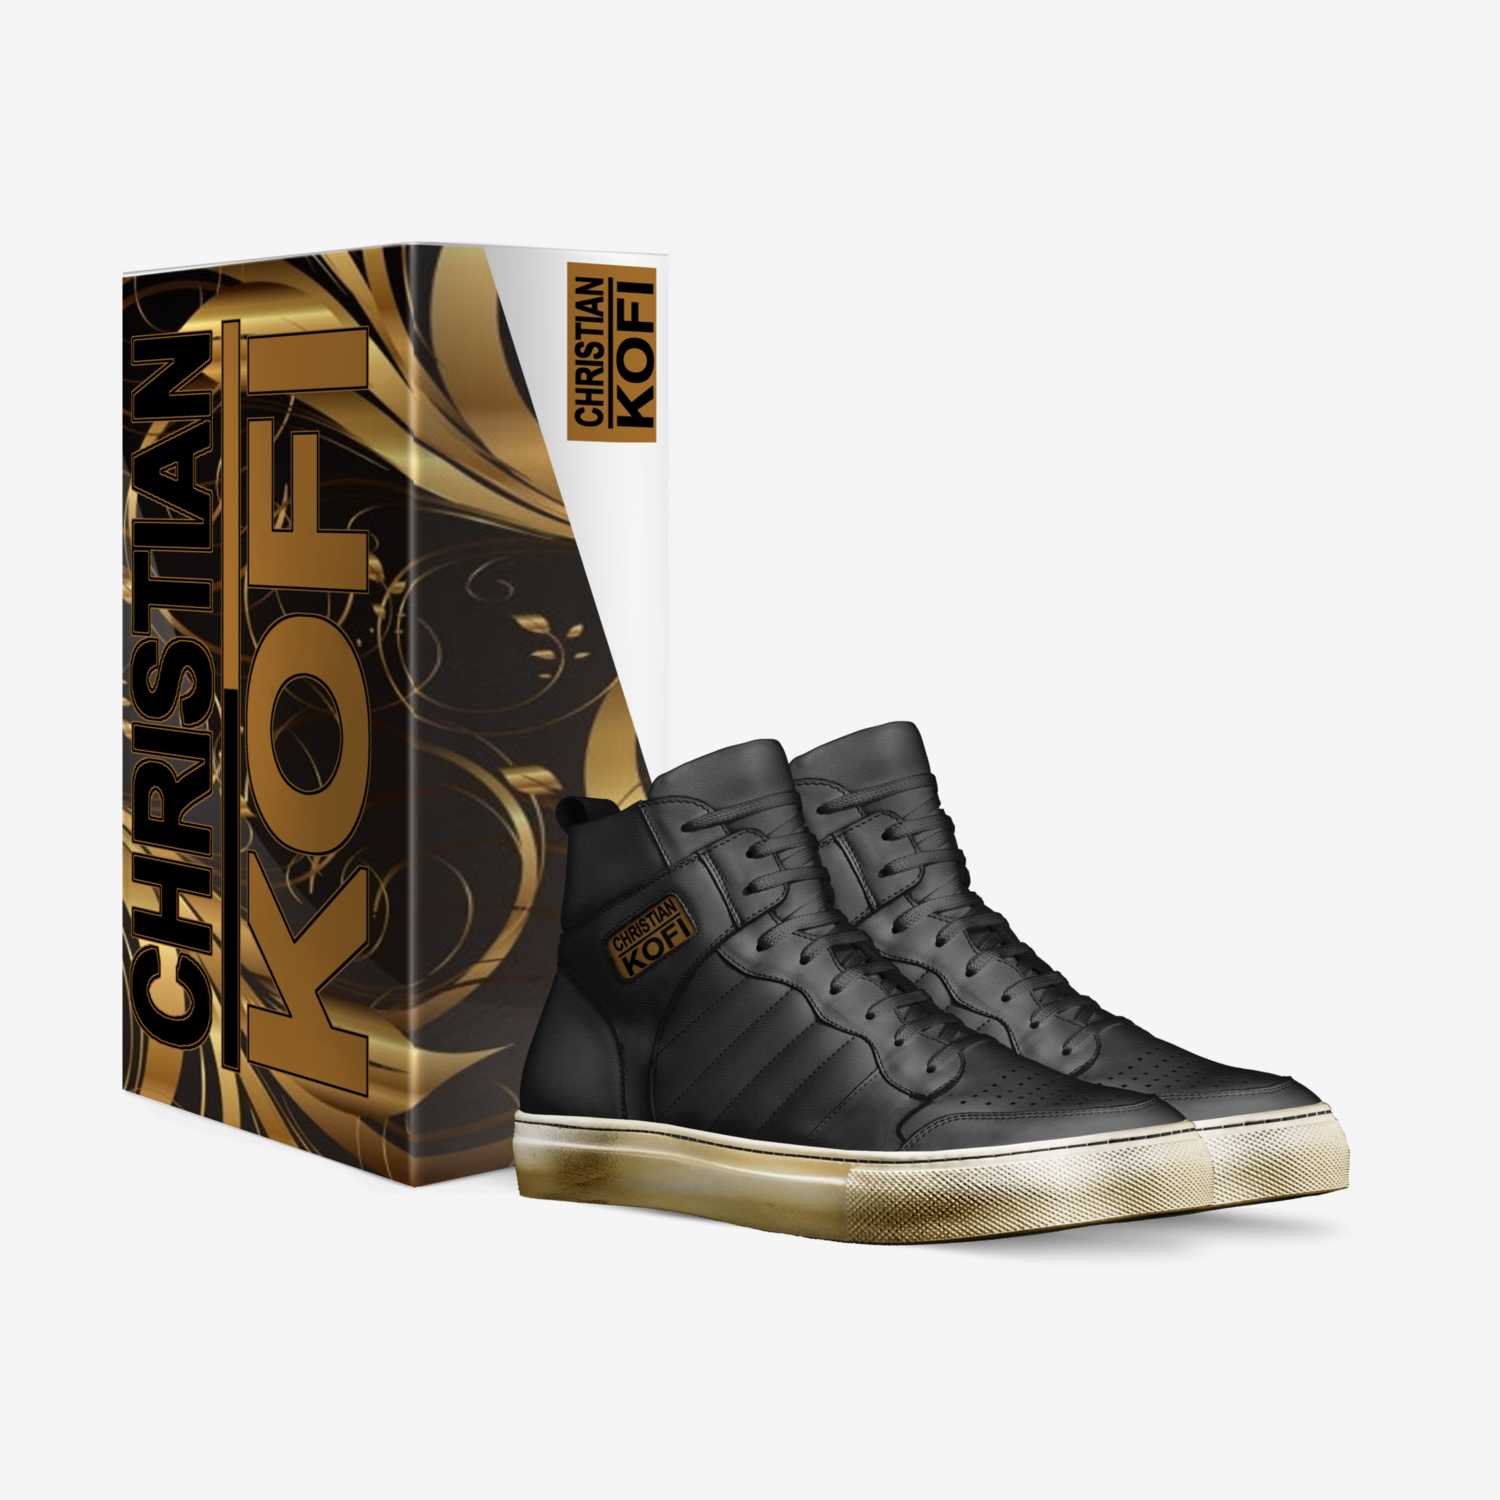 Christian Kofi GLD custom made in Italy shoes by Christian Kofi Edwards | Box view